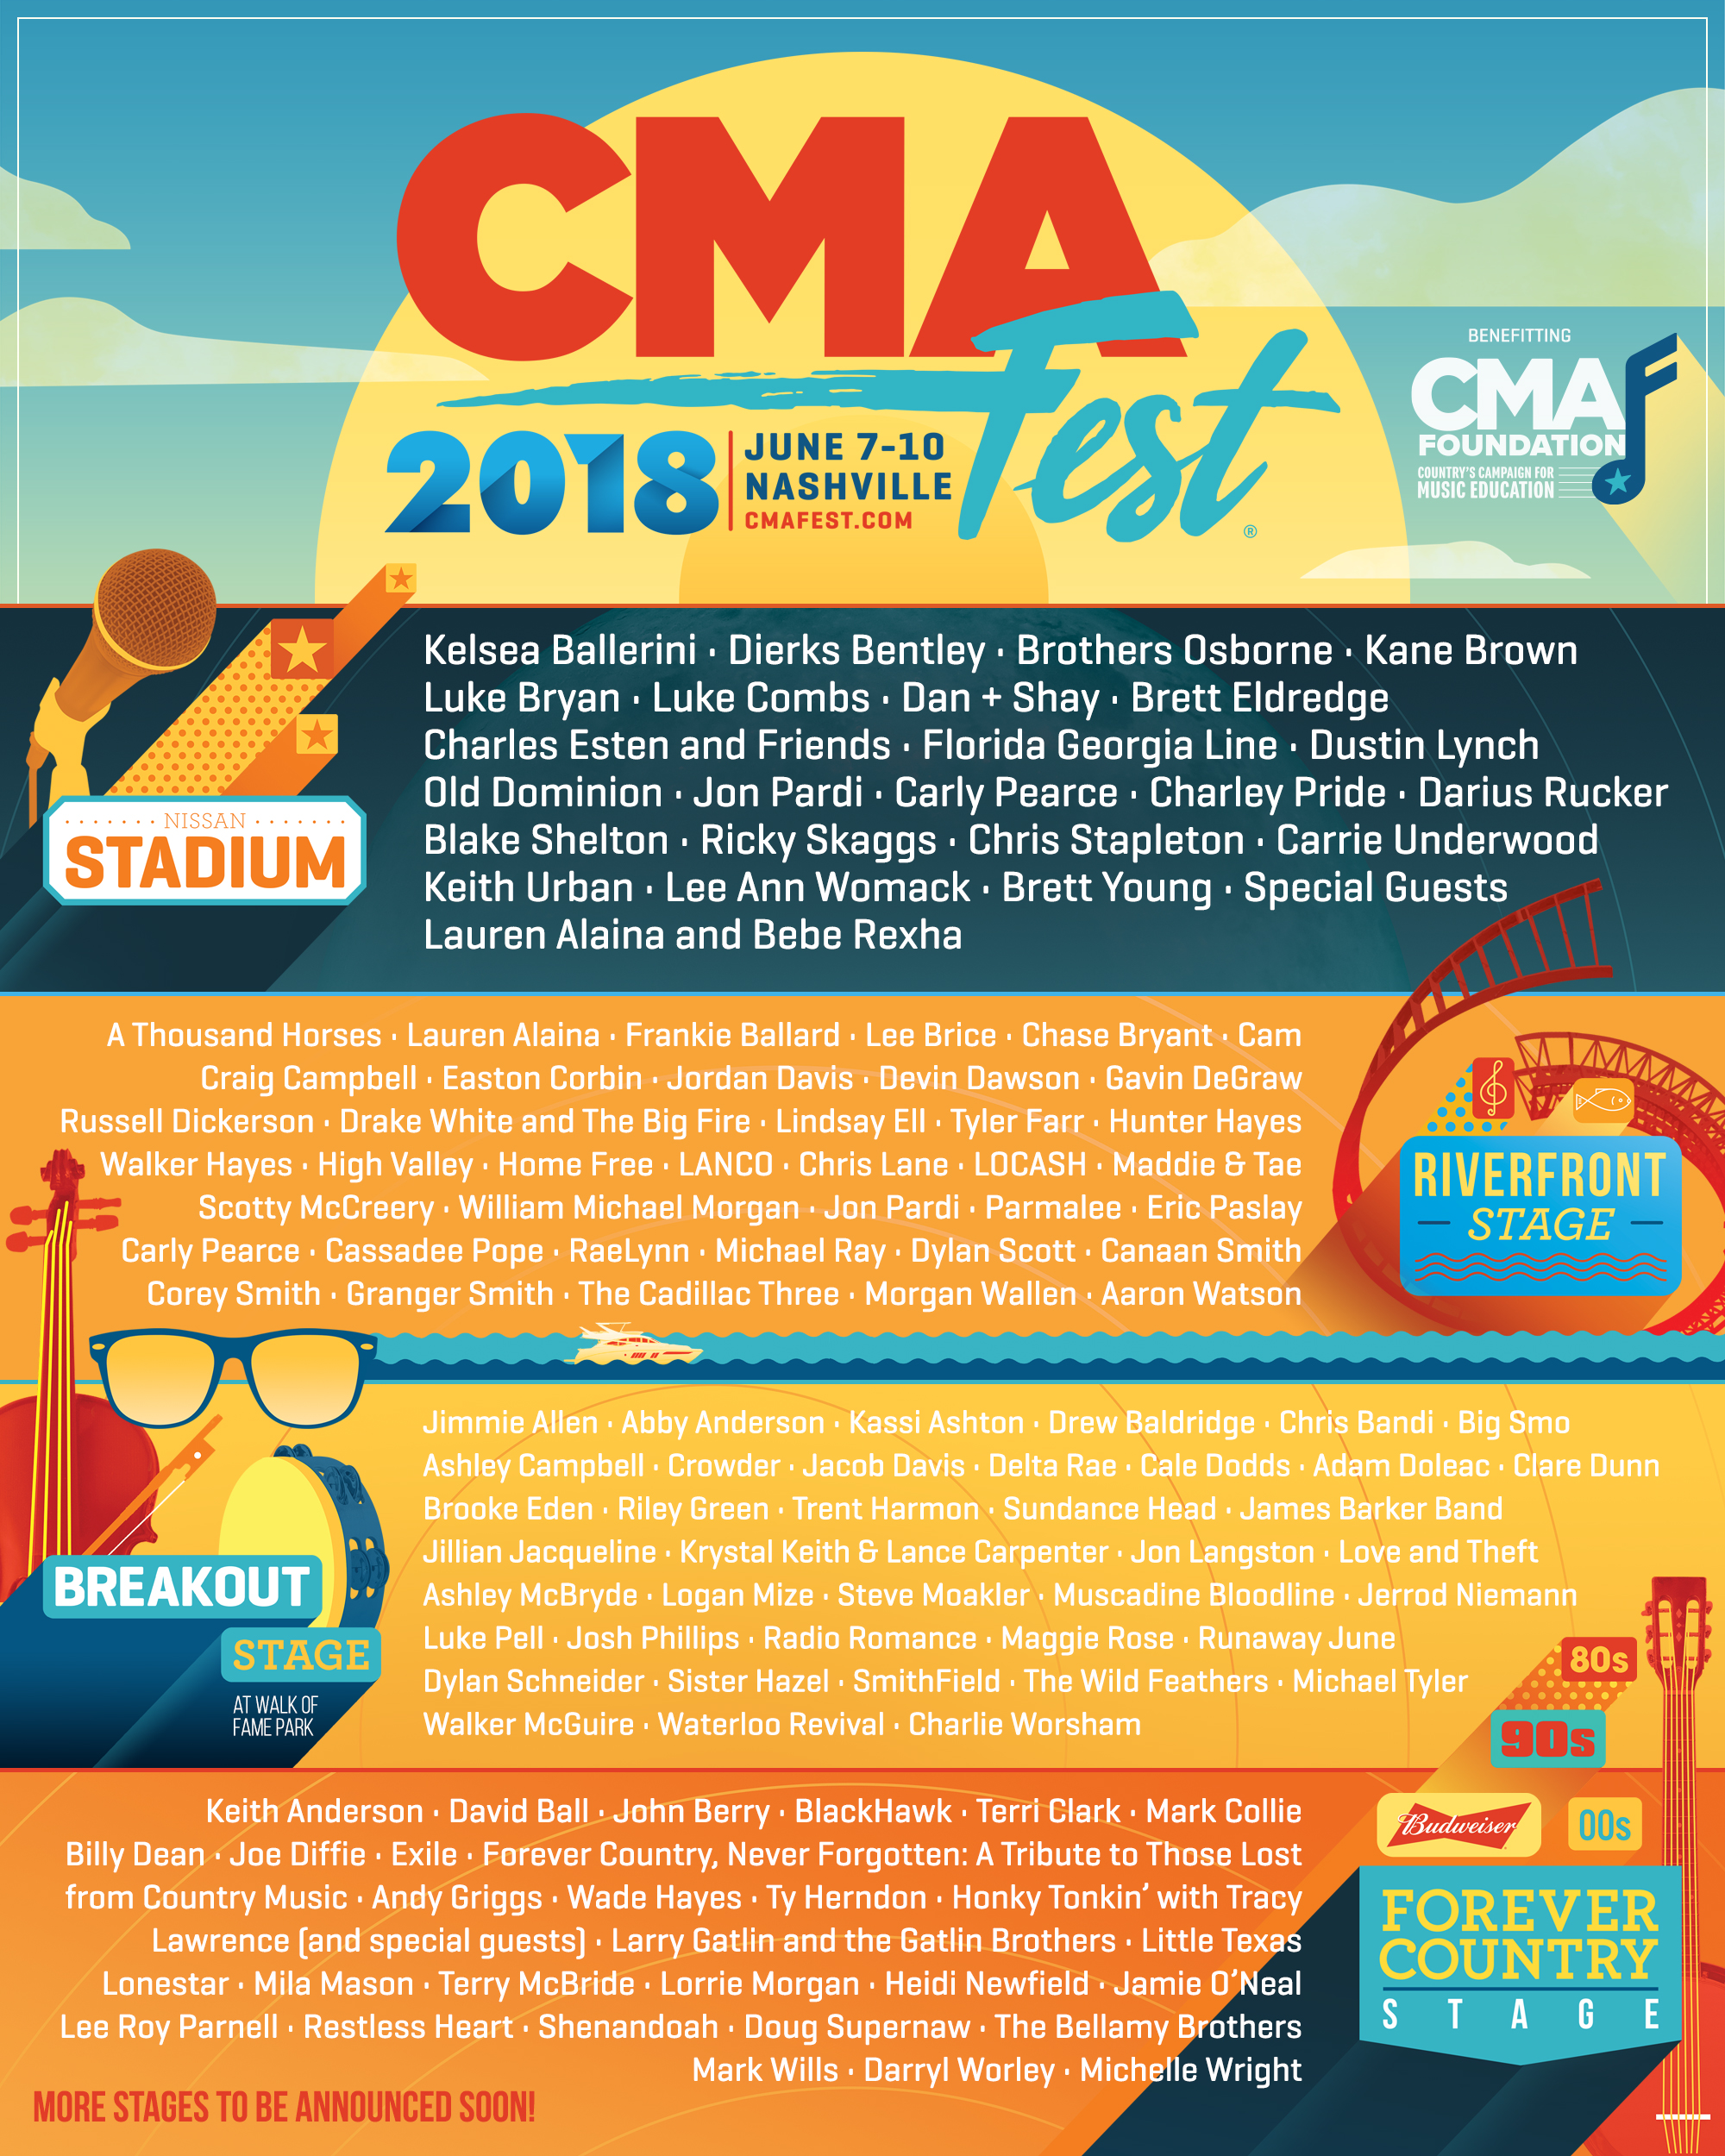 CMA Announces Stadium Lineup at 2018 CMA Music Festival Sounds Like